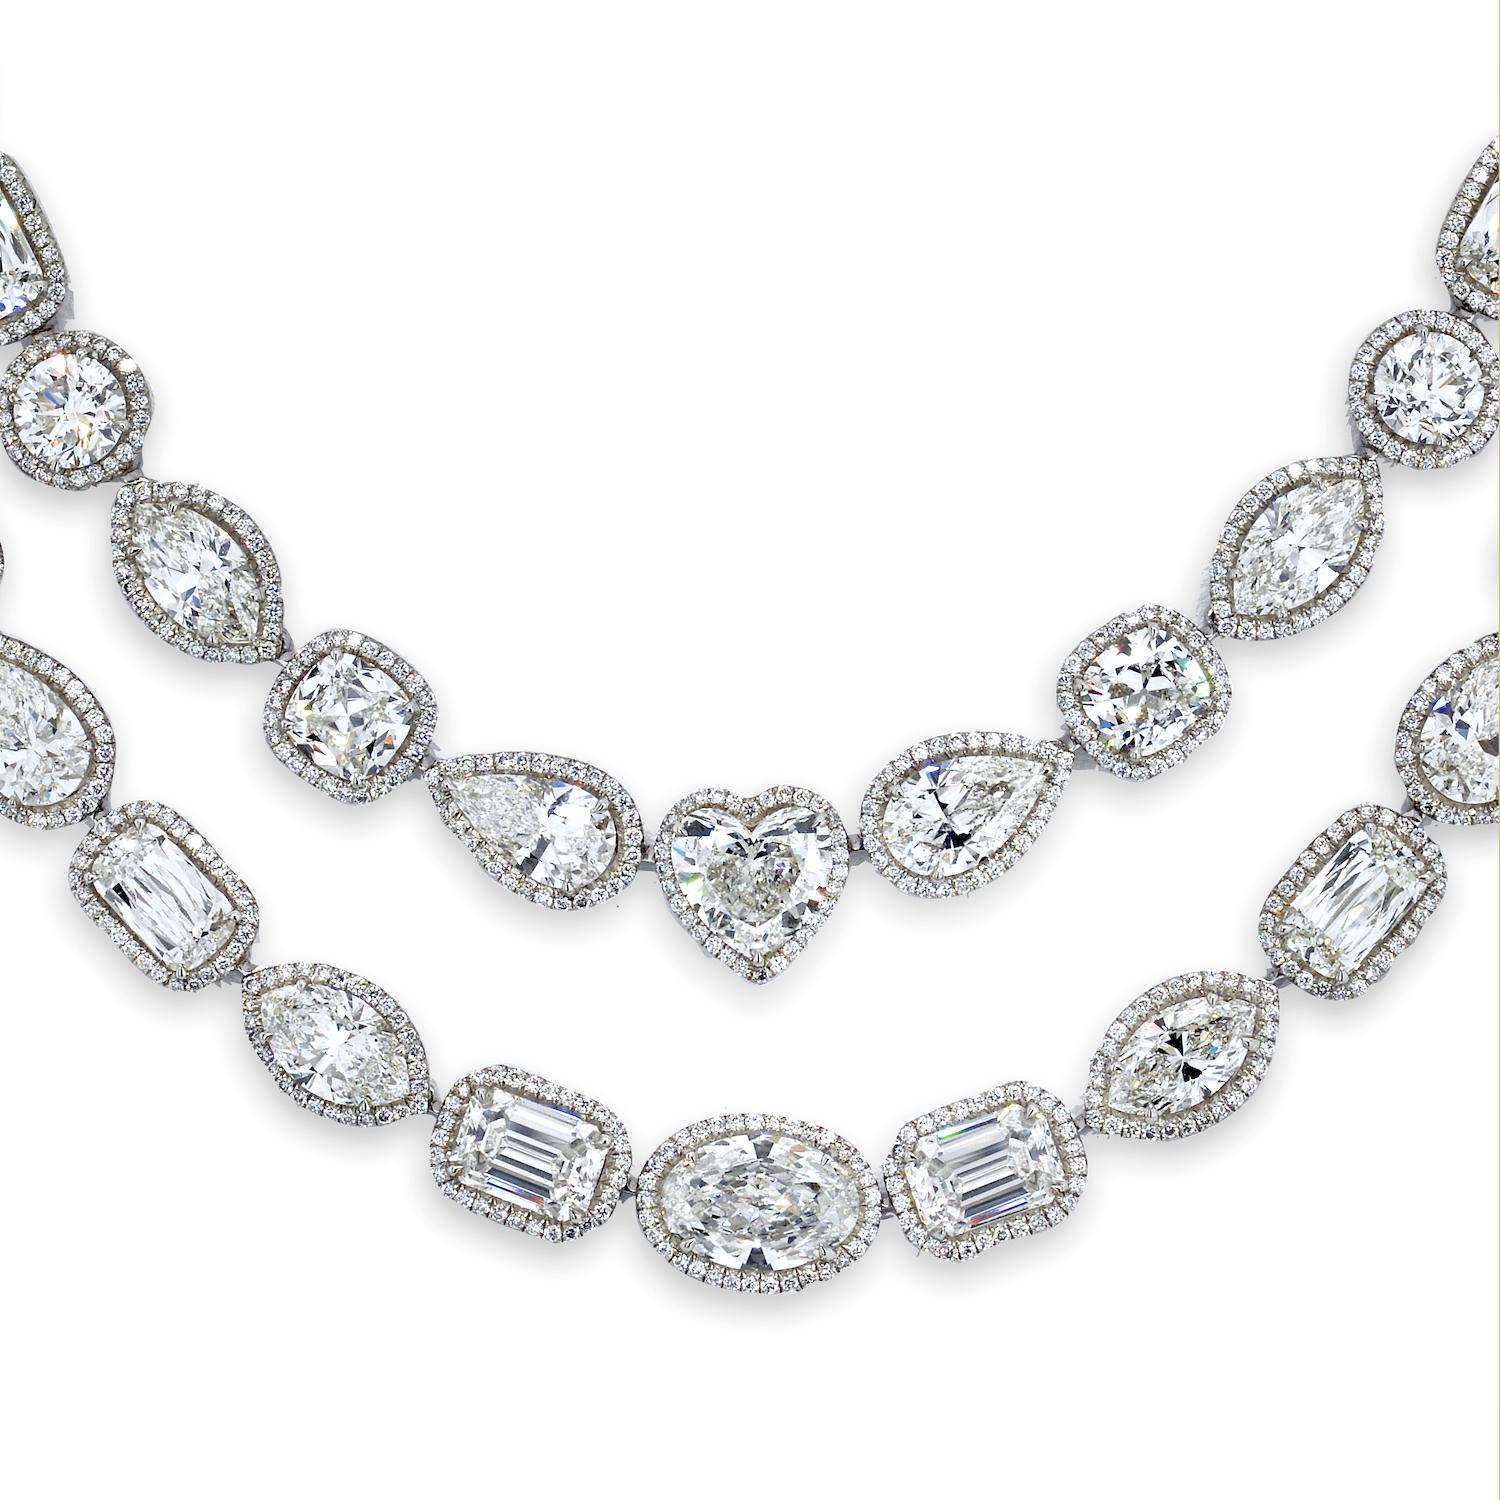 William Goldberg 63 Carat Spectacular Diamond Infinity Necklace For Sale 1